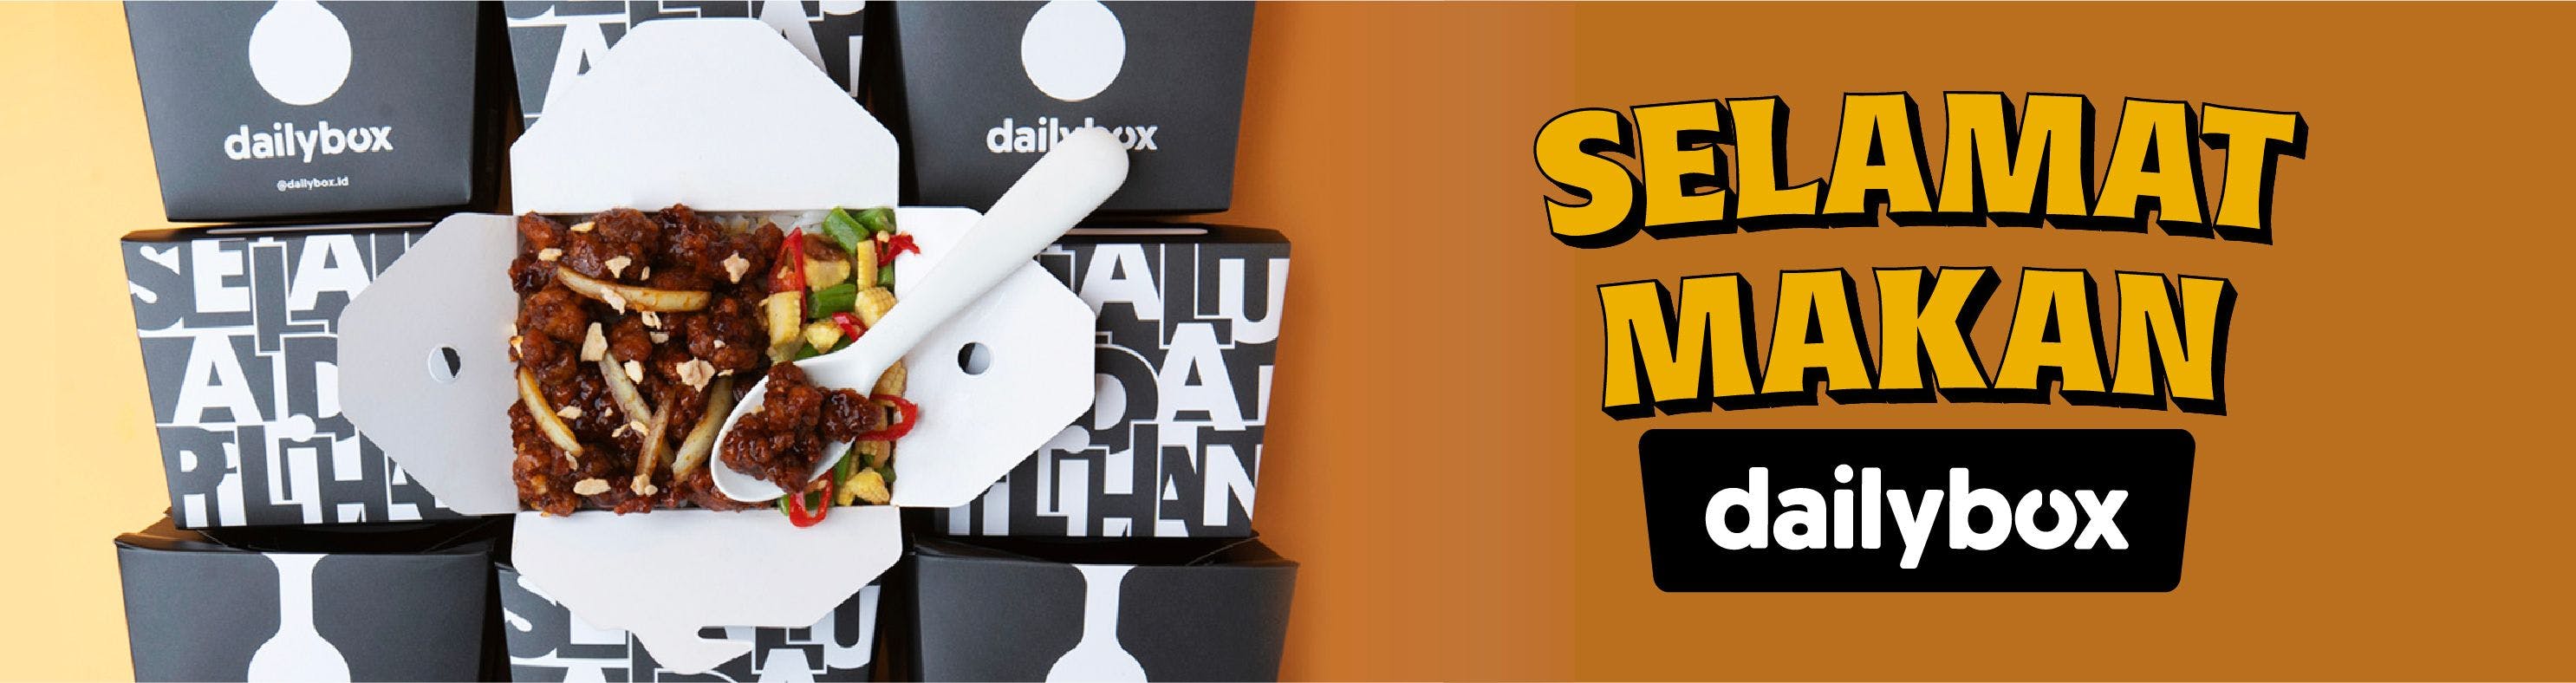 logo-dailybox